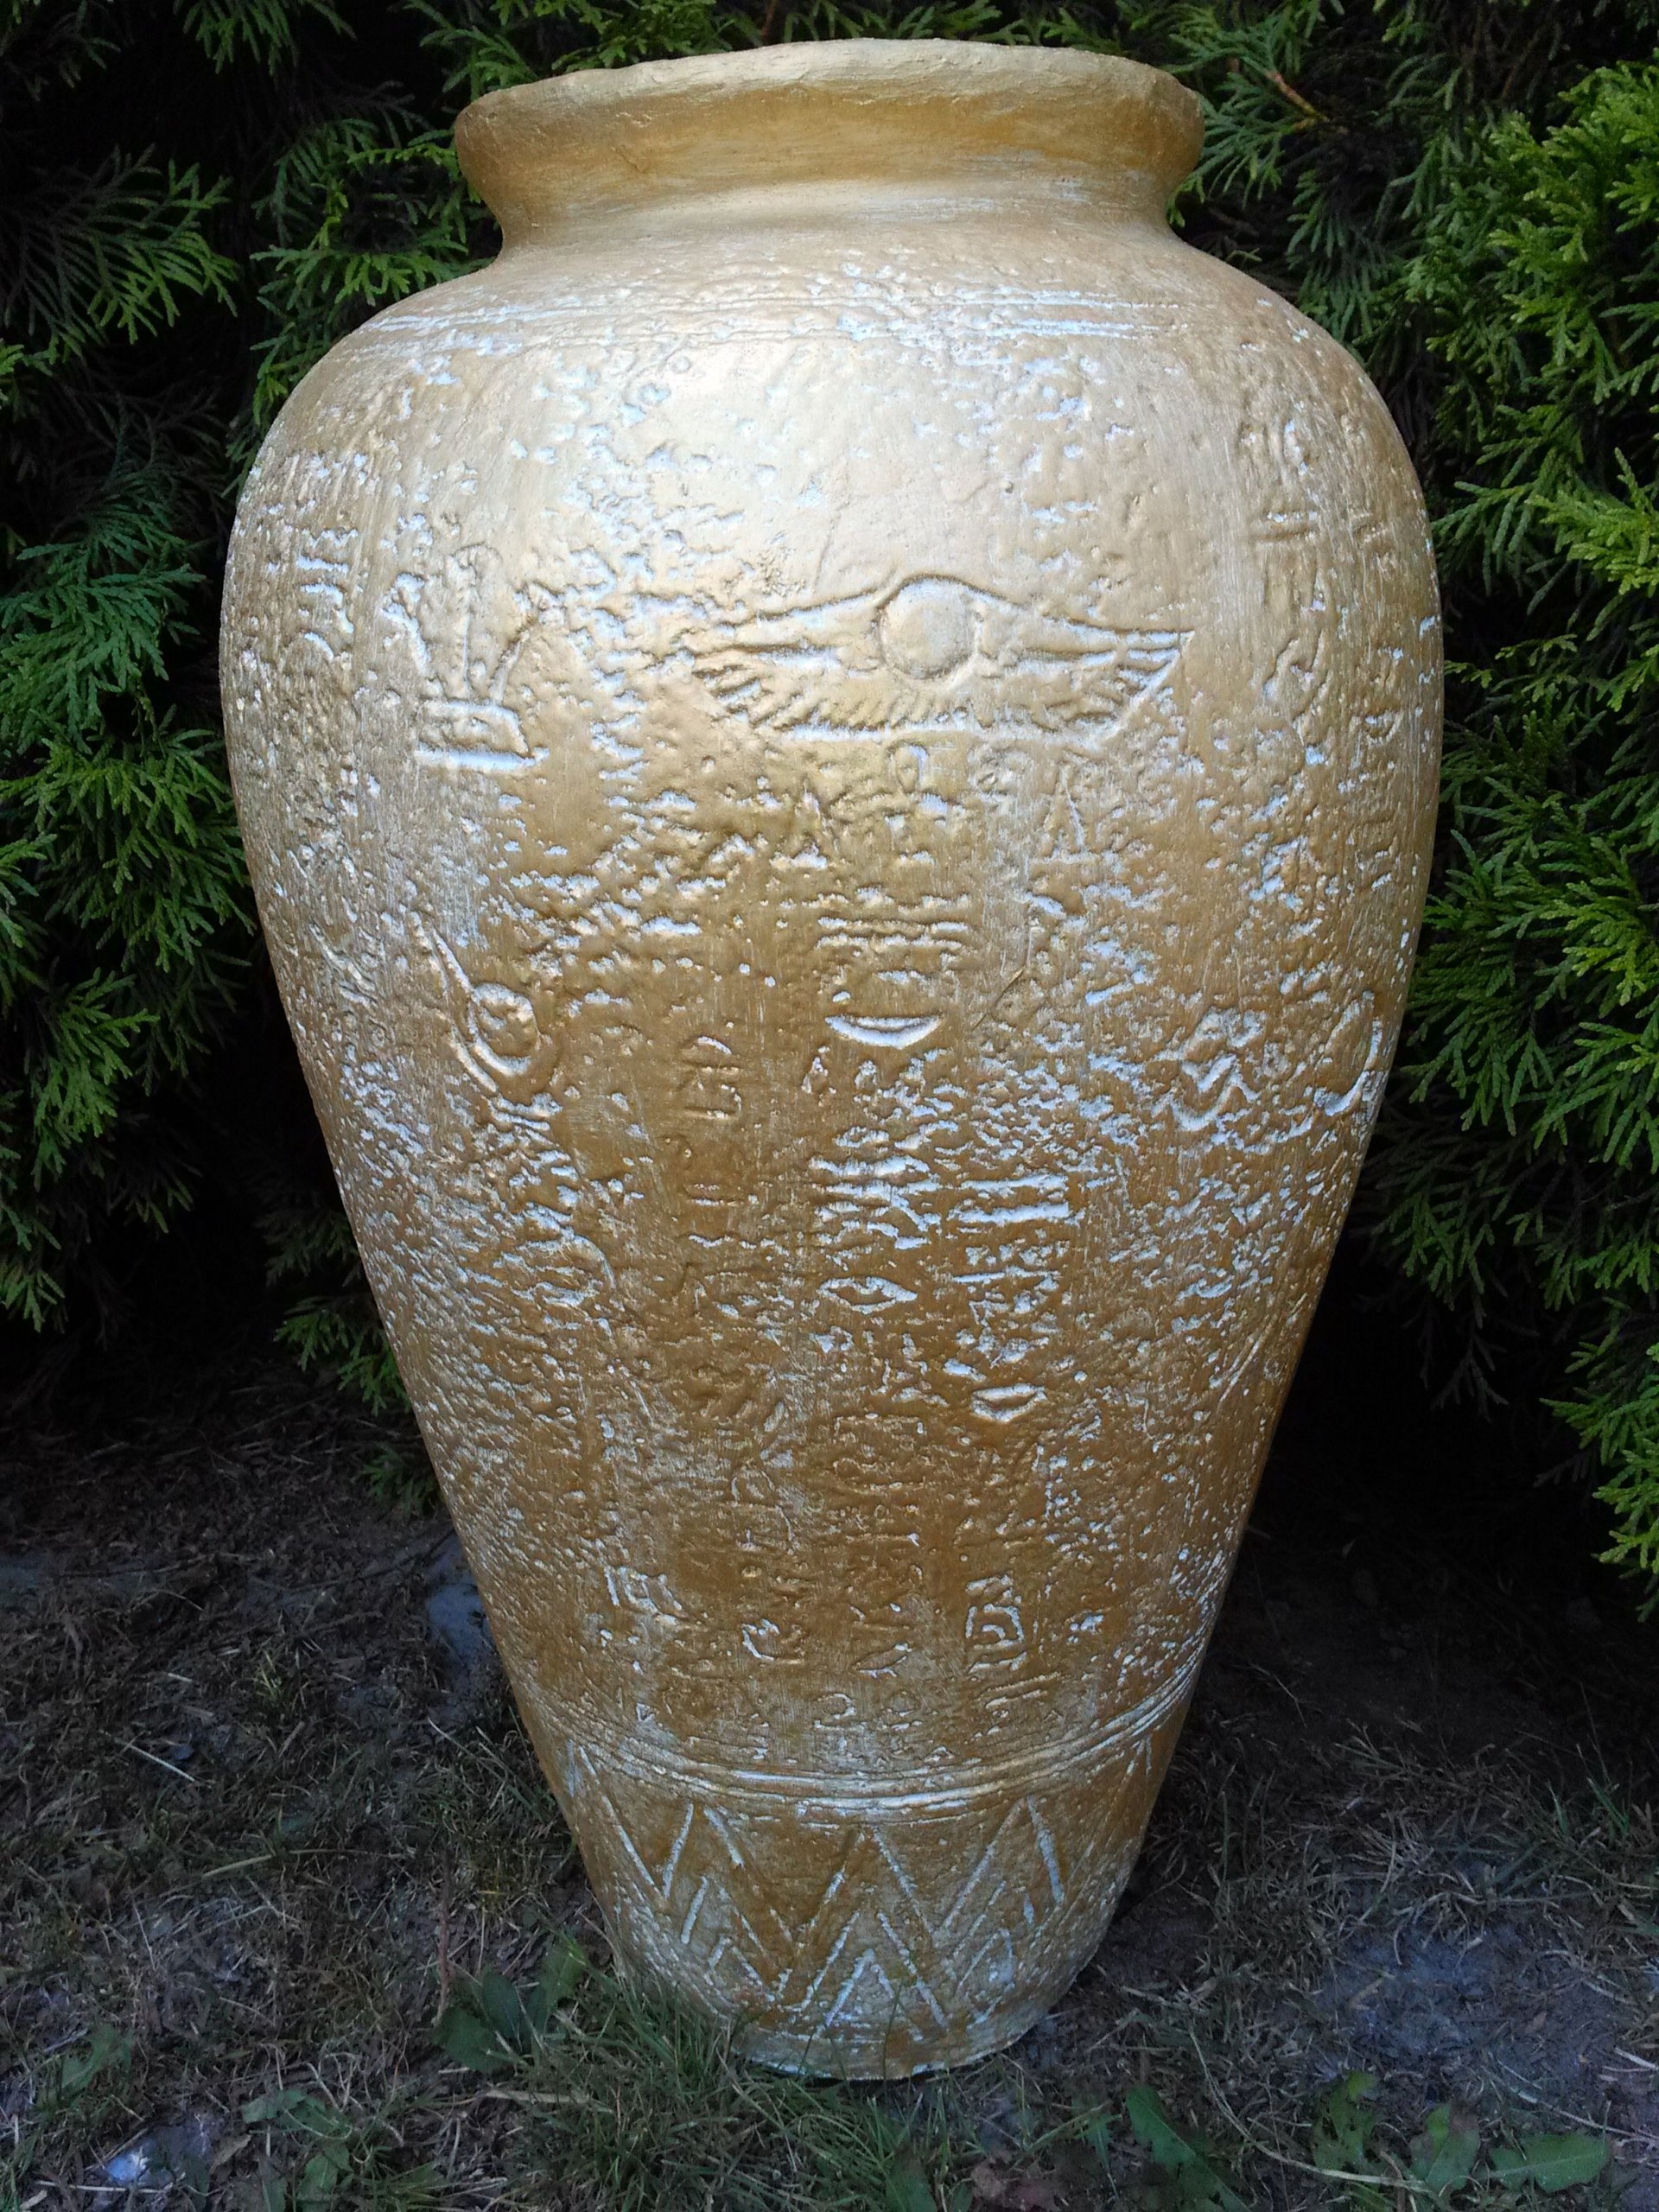 вазы египта